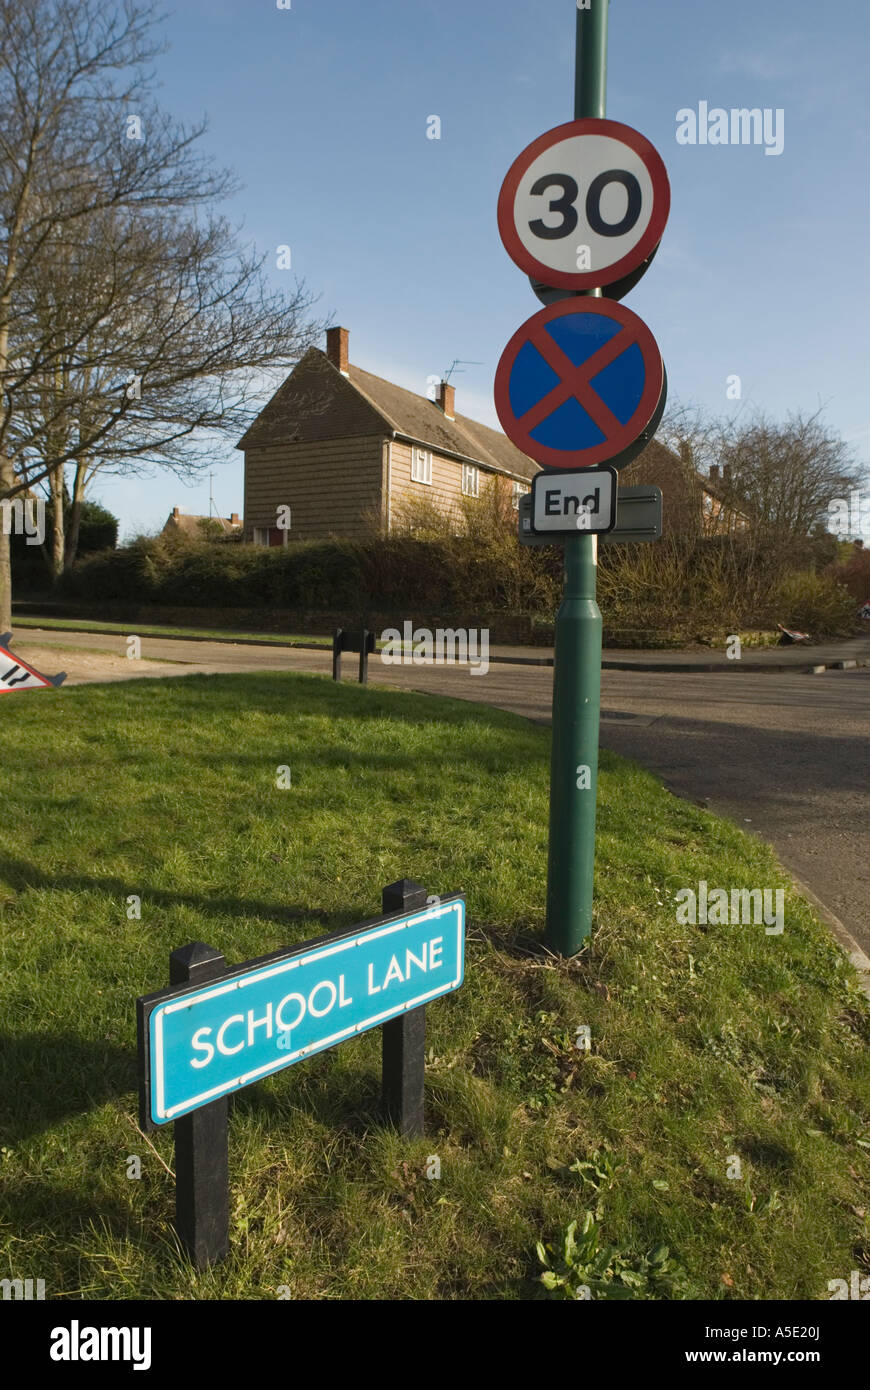 School lane sign in Harlow Town Stock Photo